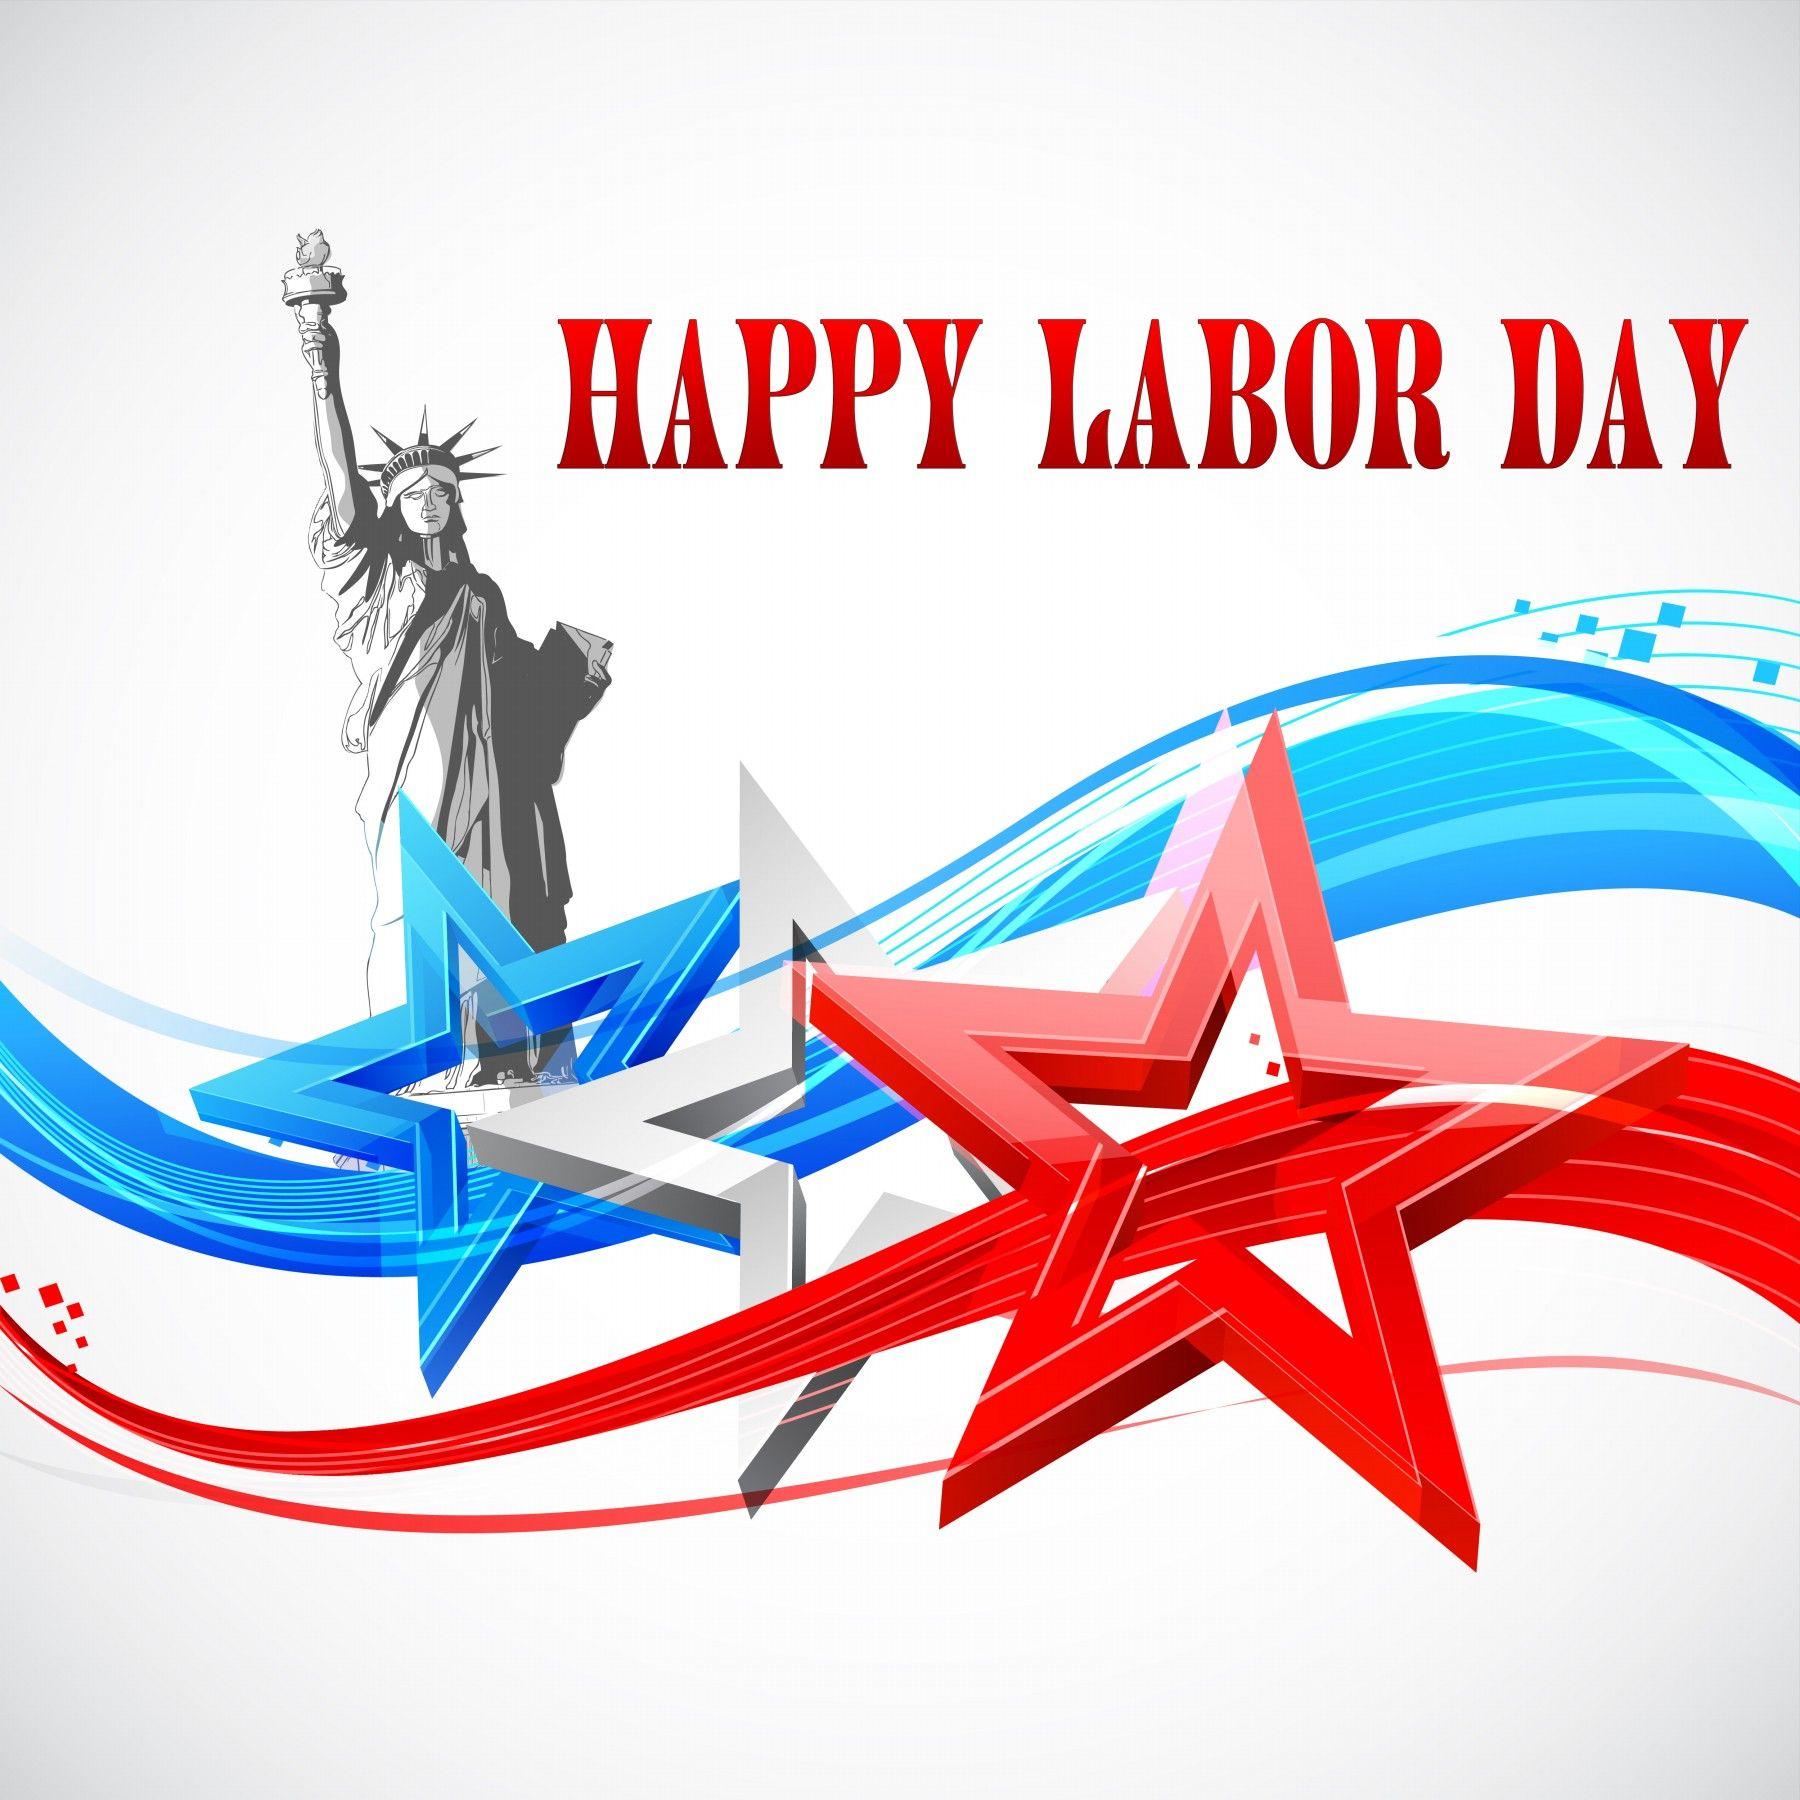 Labor Day USA Wallpaper, Image, Pics, Greetings 2014